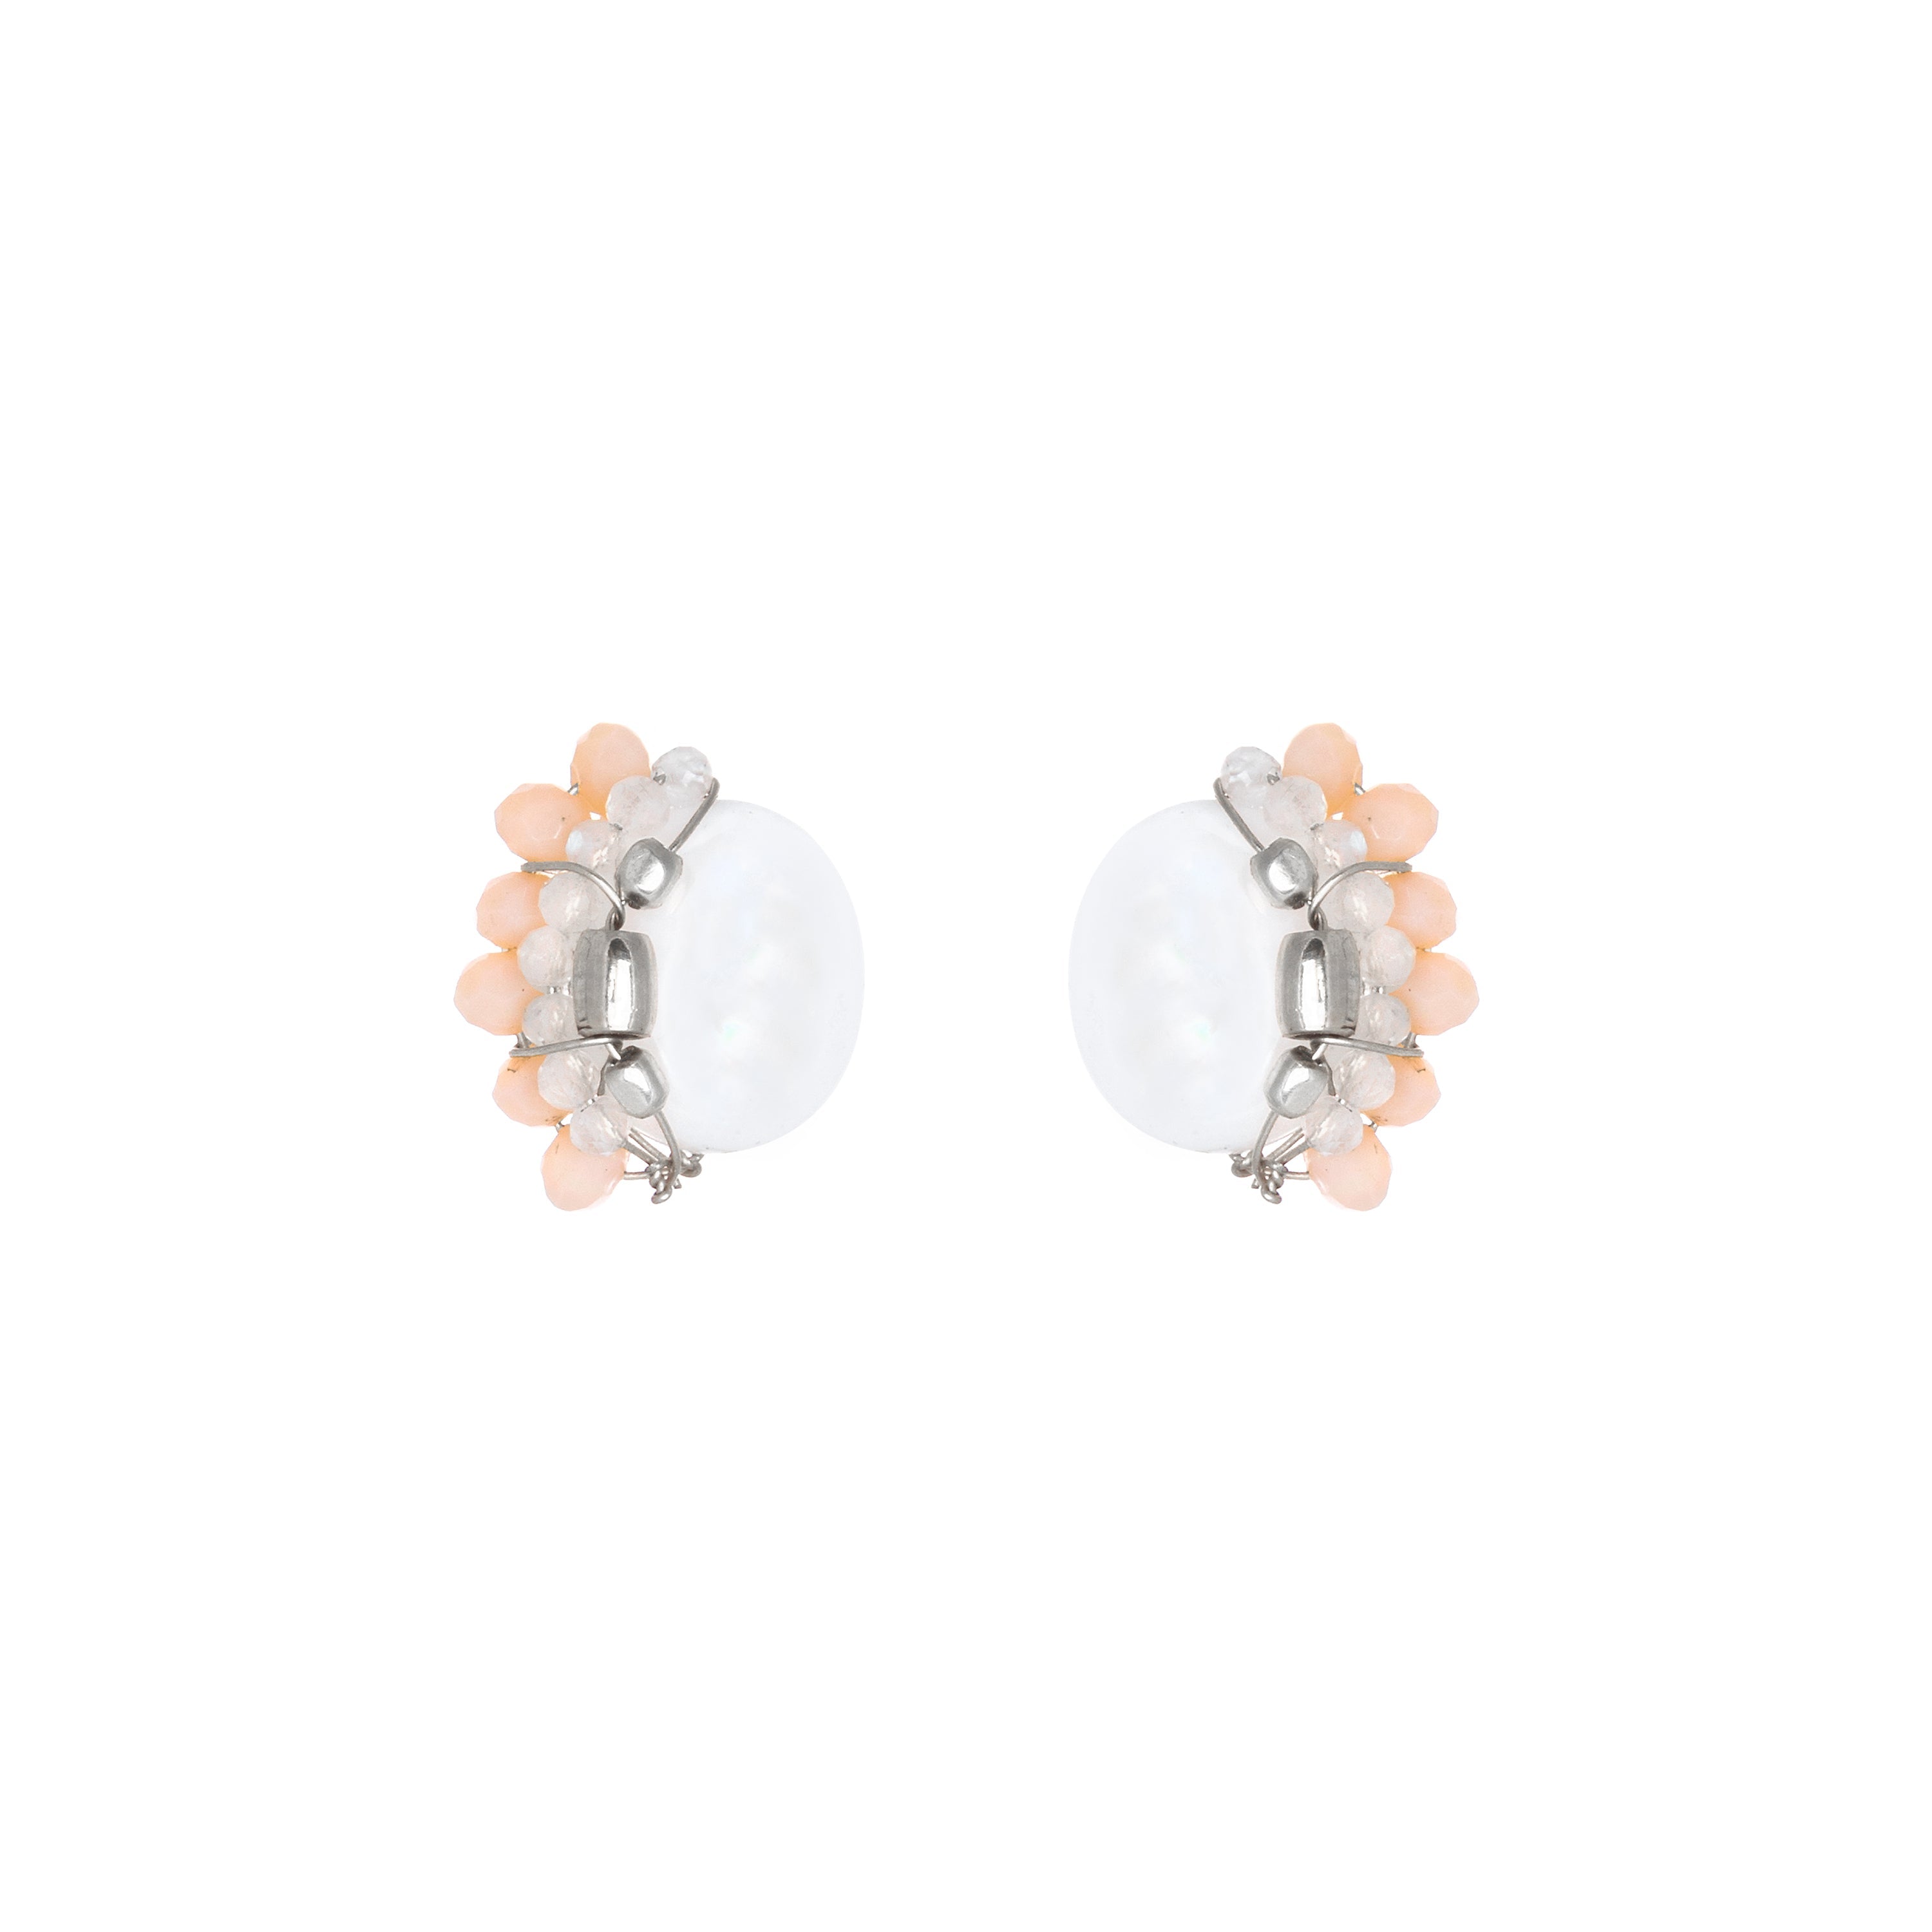 THE MARIANNA Earrings Jimena Alejandra Silver White Agate (Seashell) 